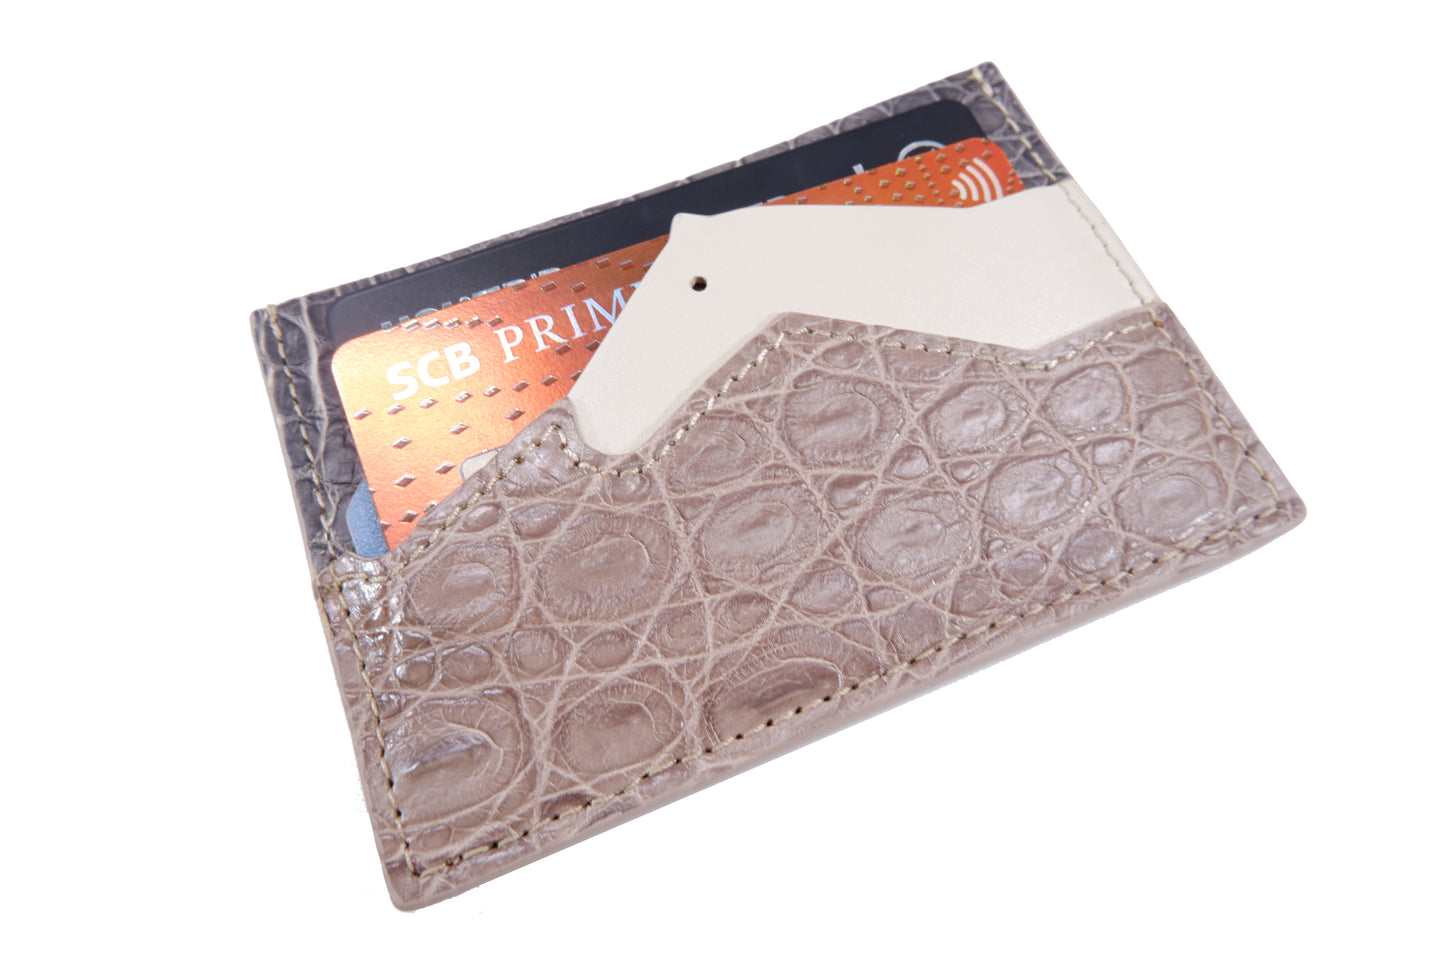 Genuine Crocodile Skin Leather Slim Business & Credit Card Holder Sleeve Wallet with Hidalgo Horse Design